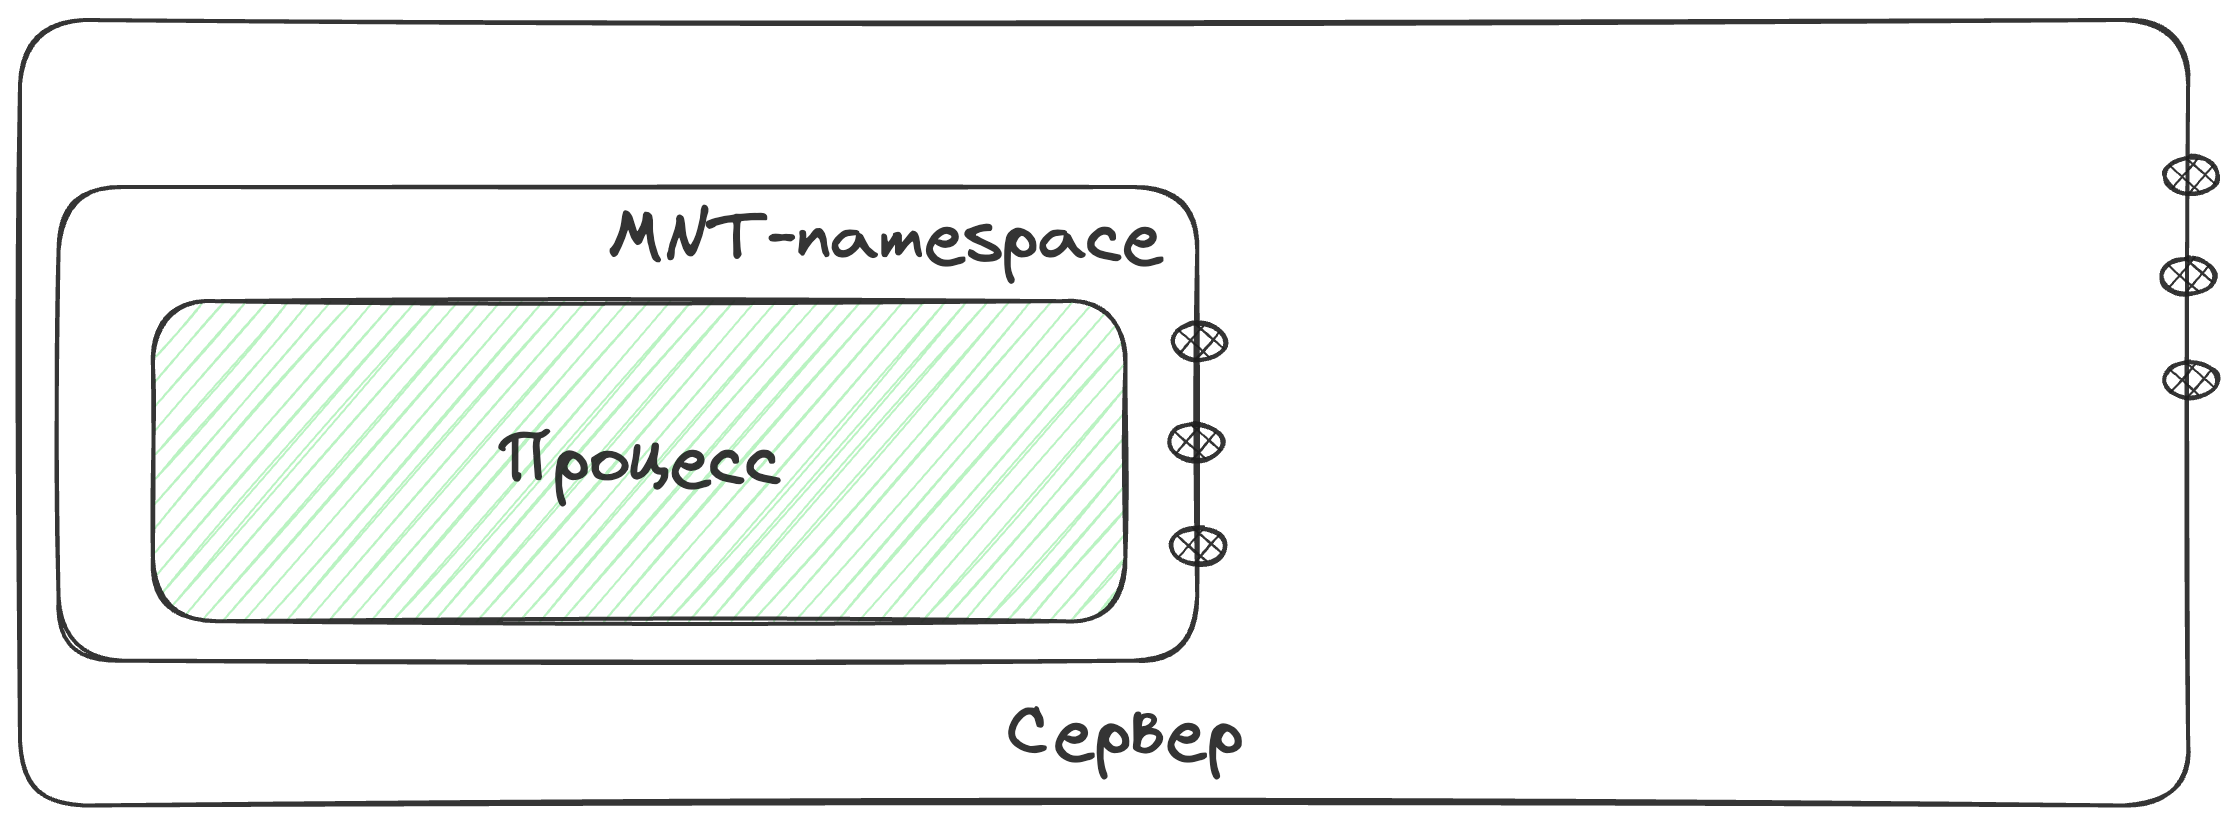 namespace-MNT